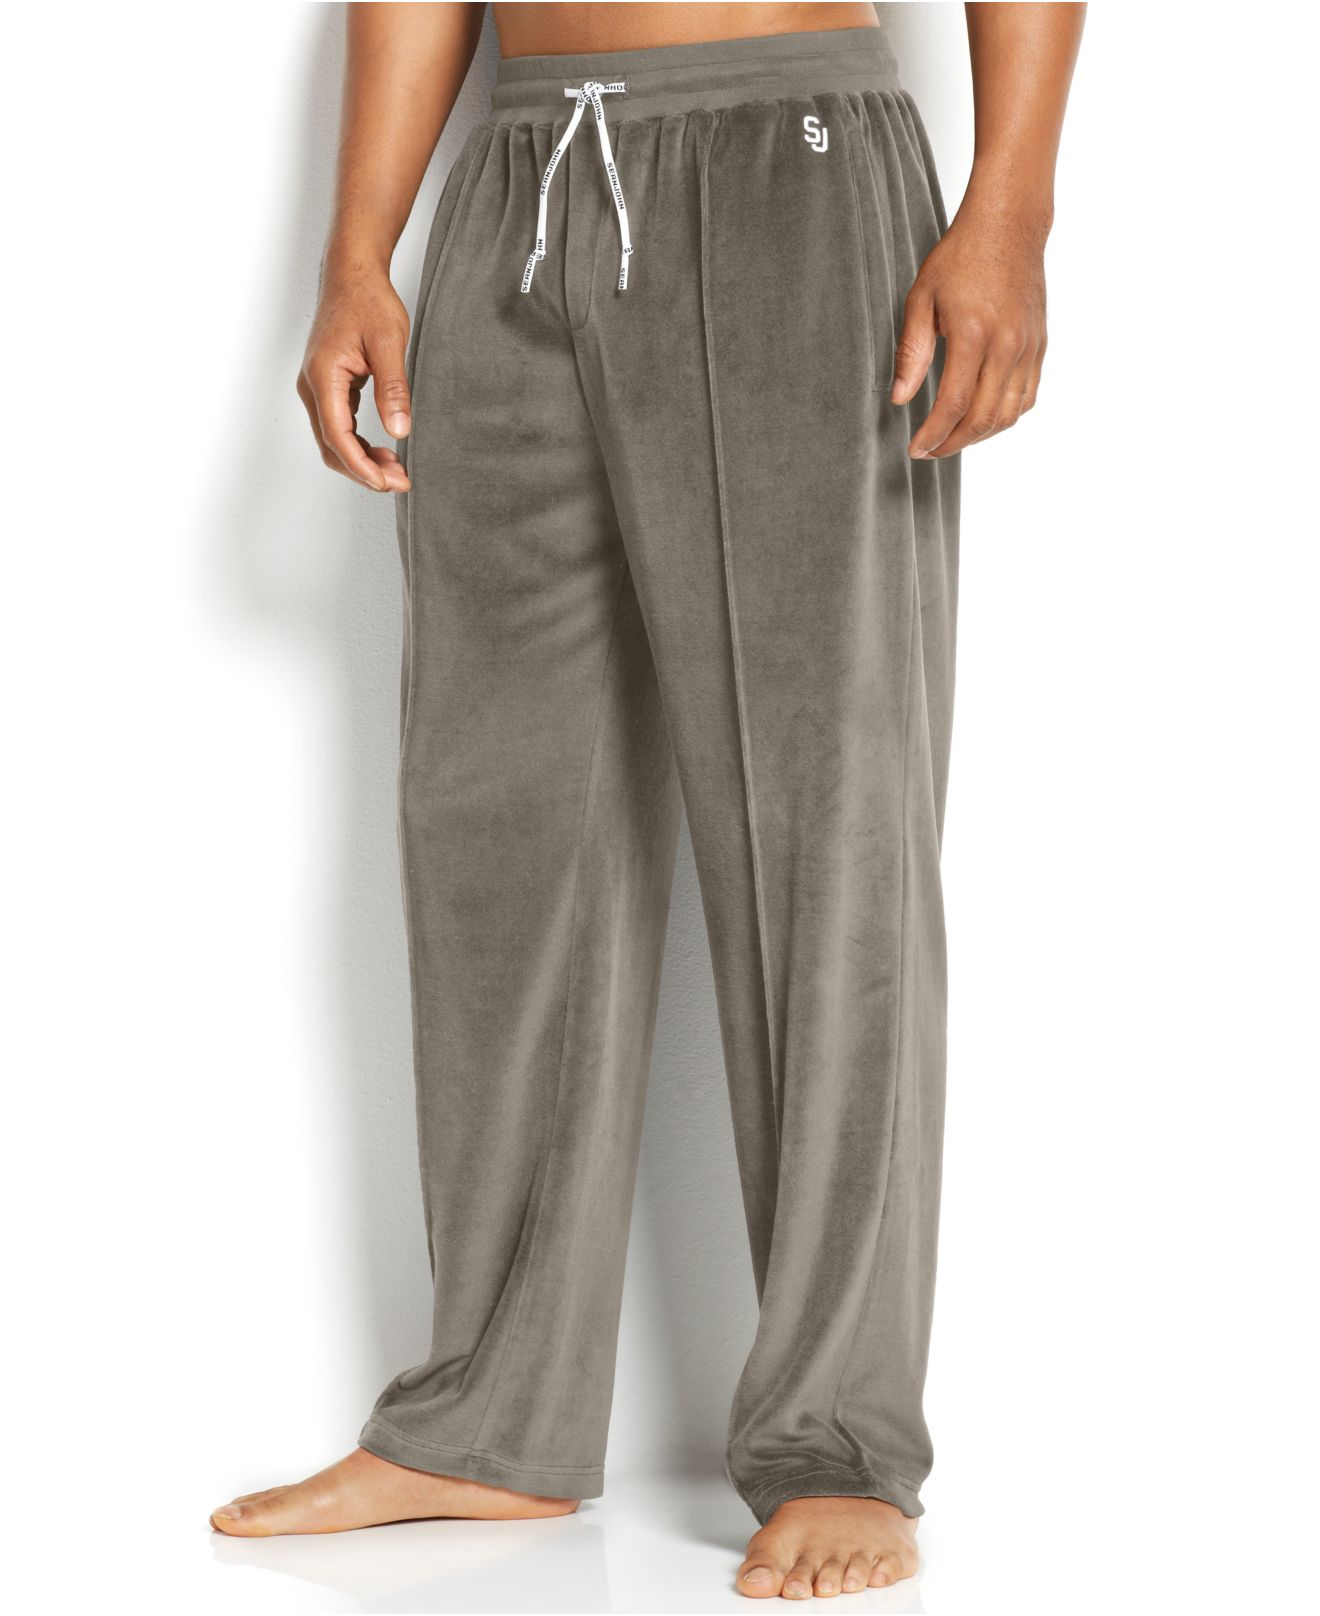 Sean John Men'S Velour Sweatpants in Grey (Gray) for Men - Lyst